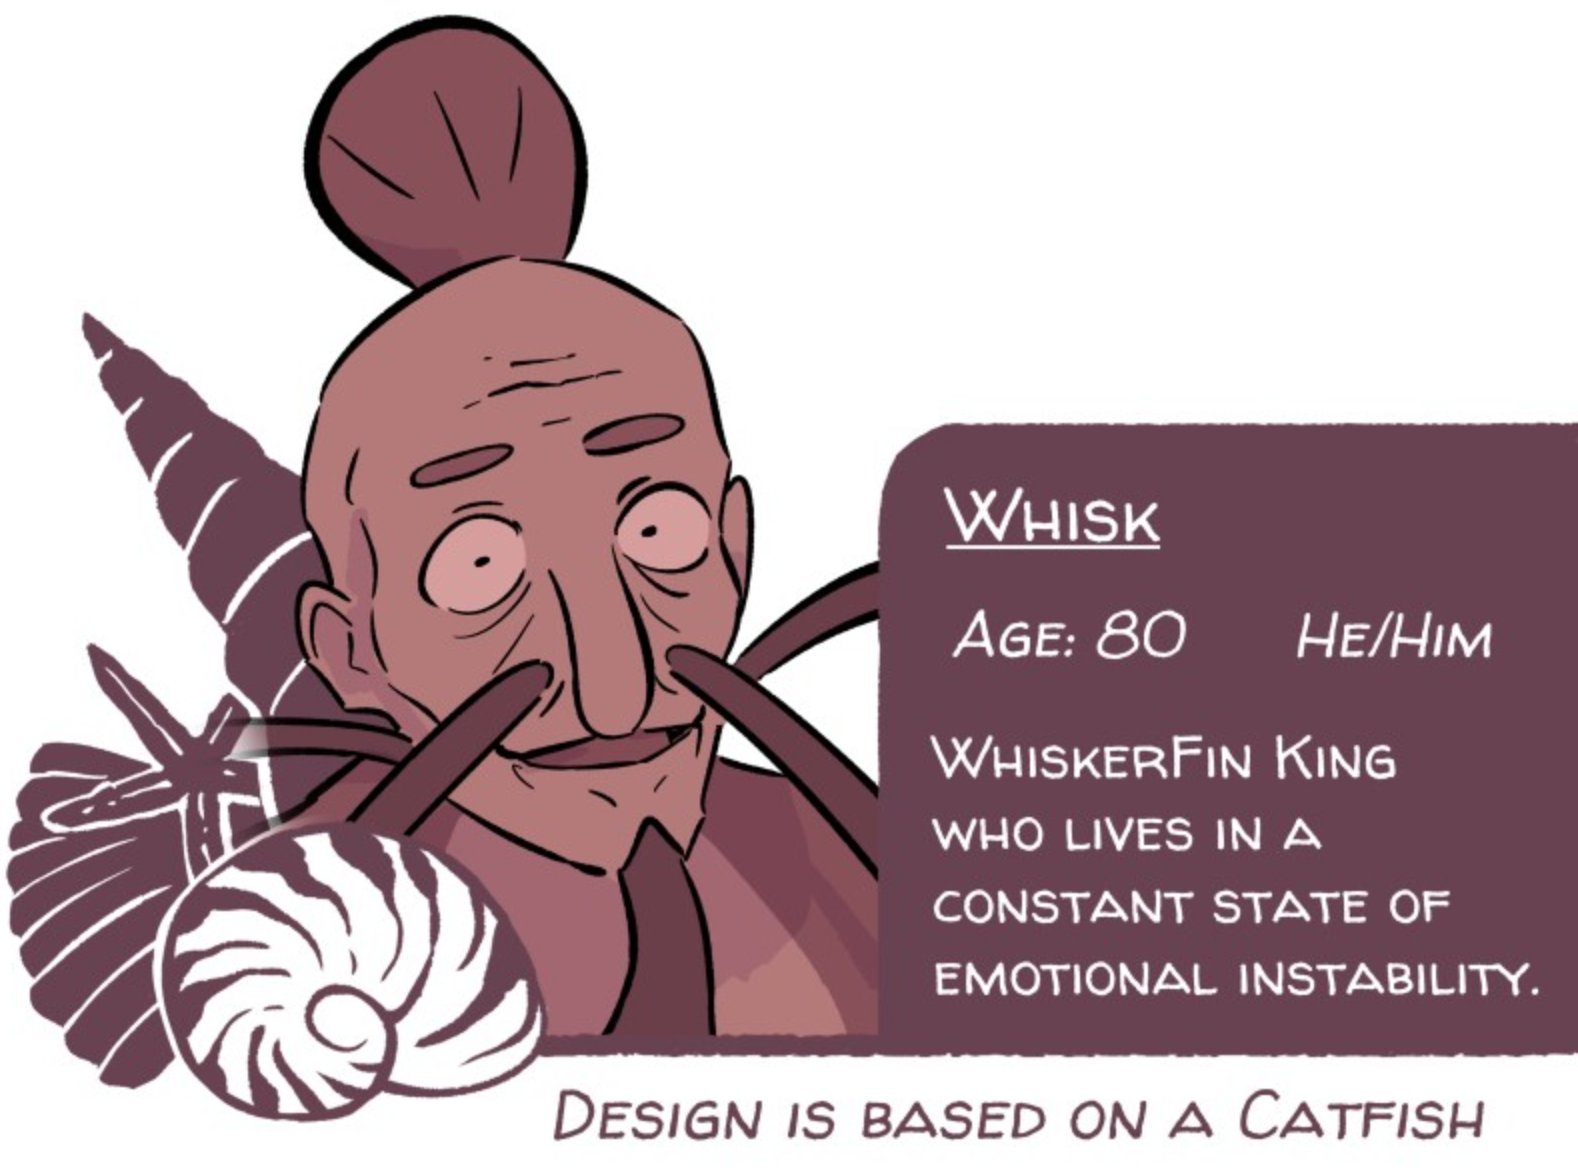 Whisk - Wikipedia